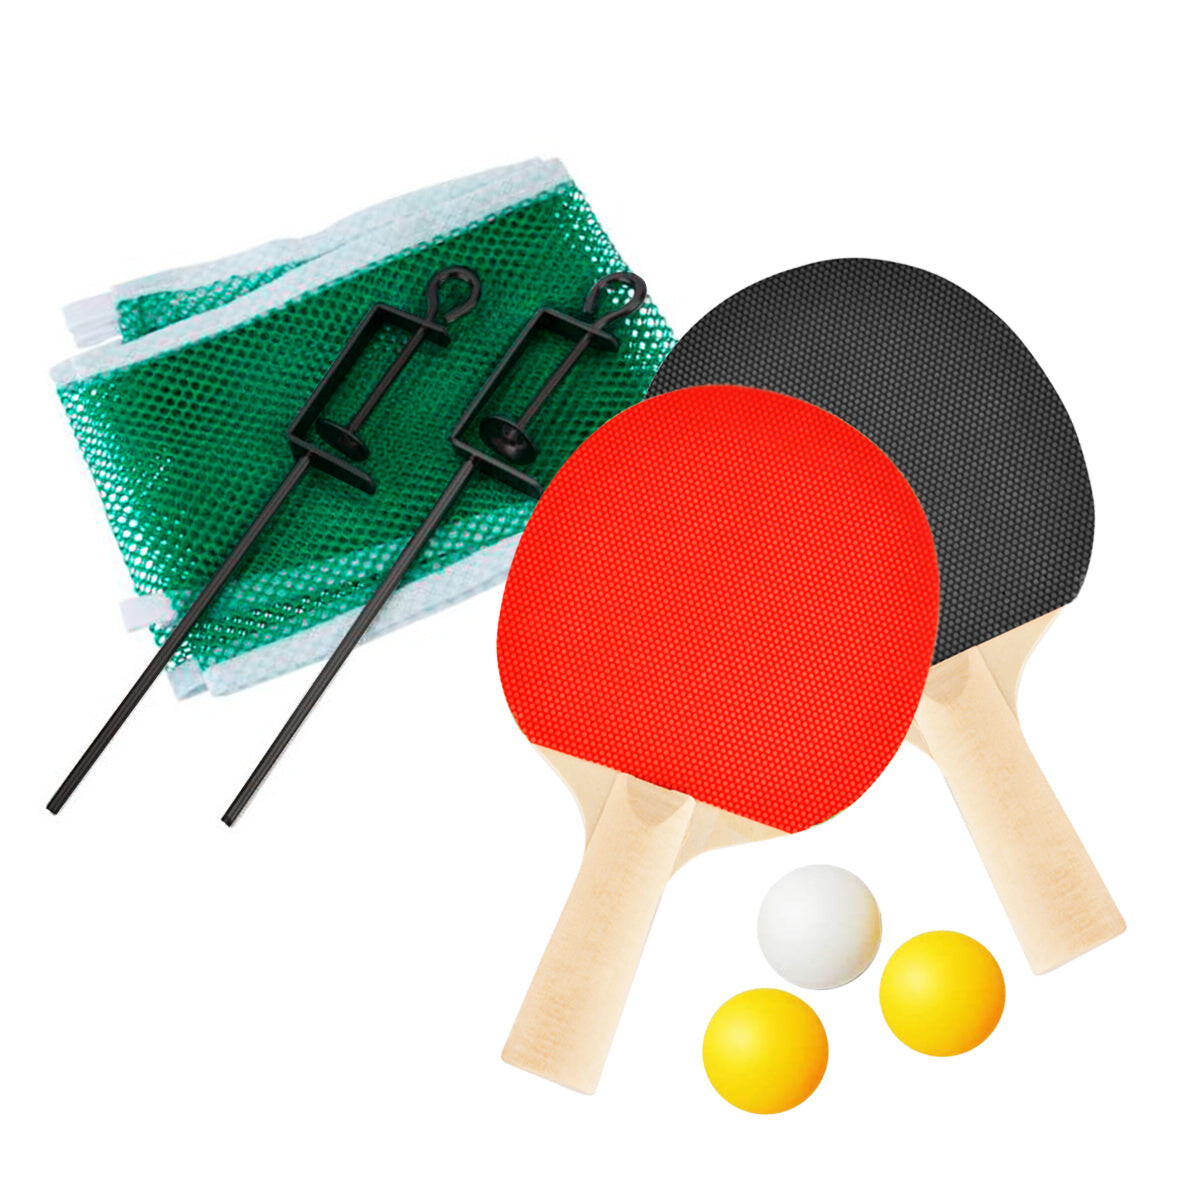 Set Ping Pong 2 Paletas +3 Pelotas + Red + Soportes 